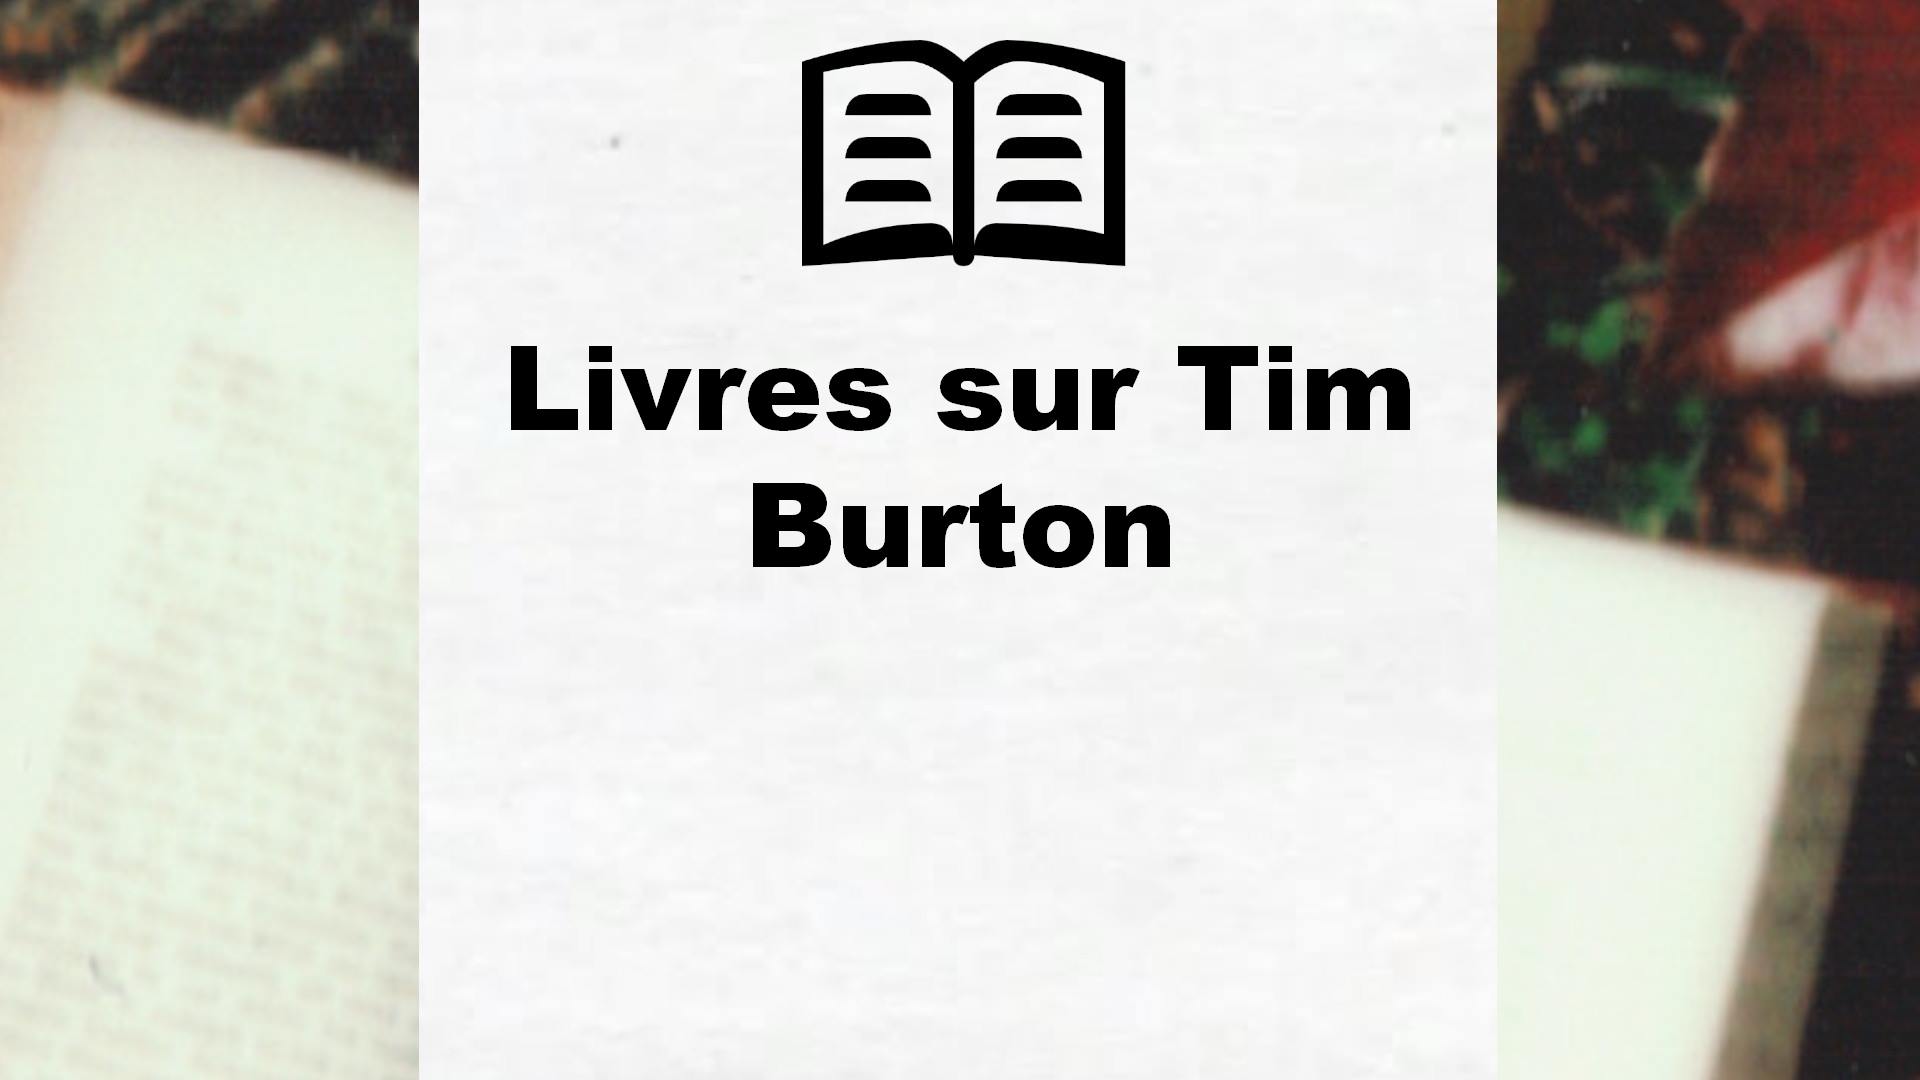 Livres sur Tim Burton